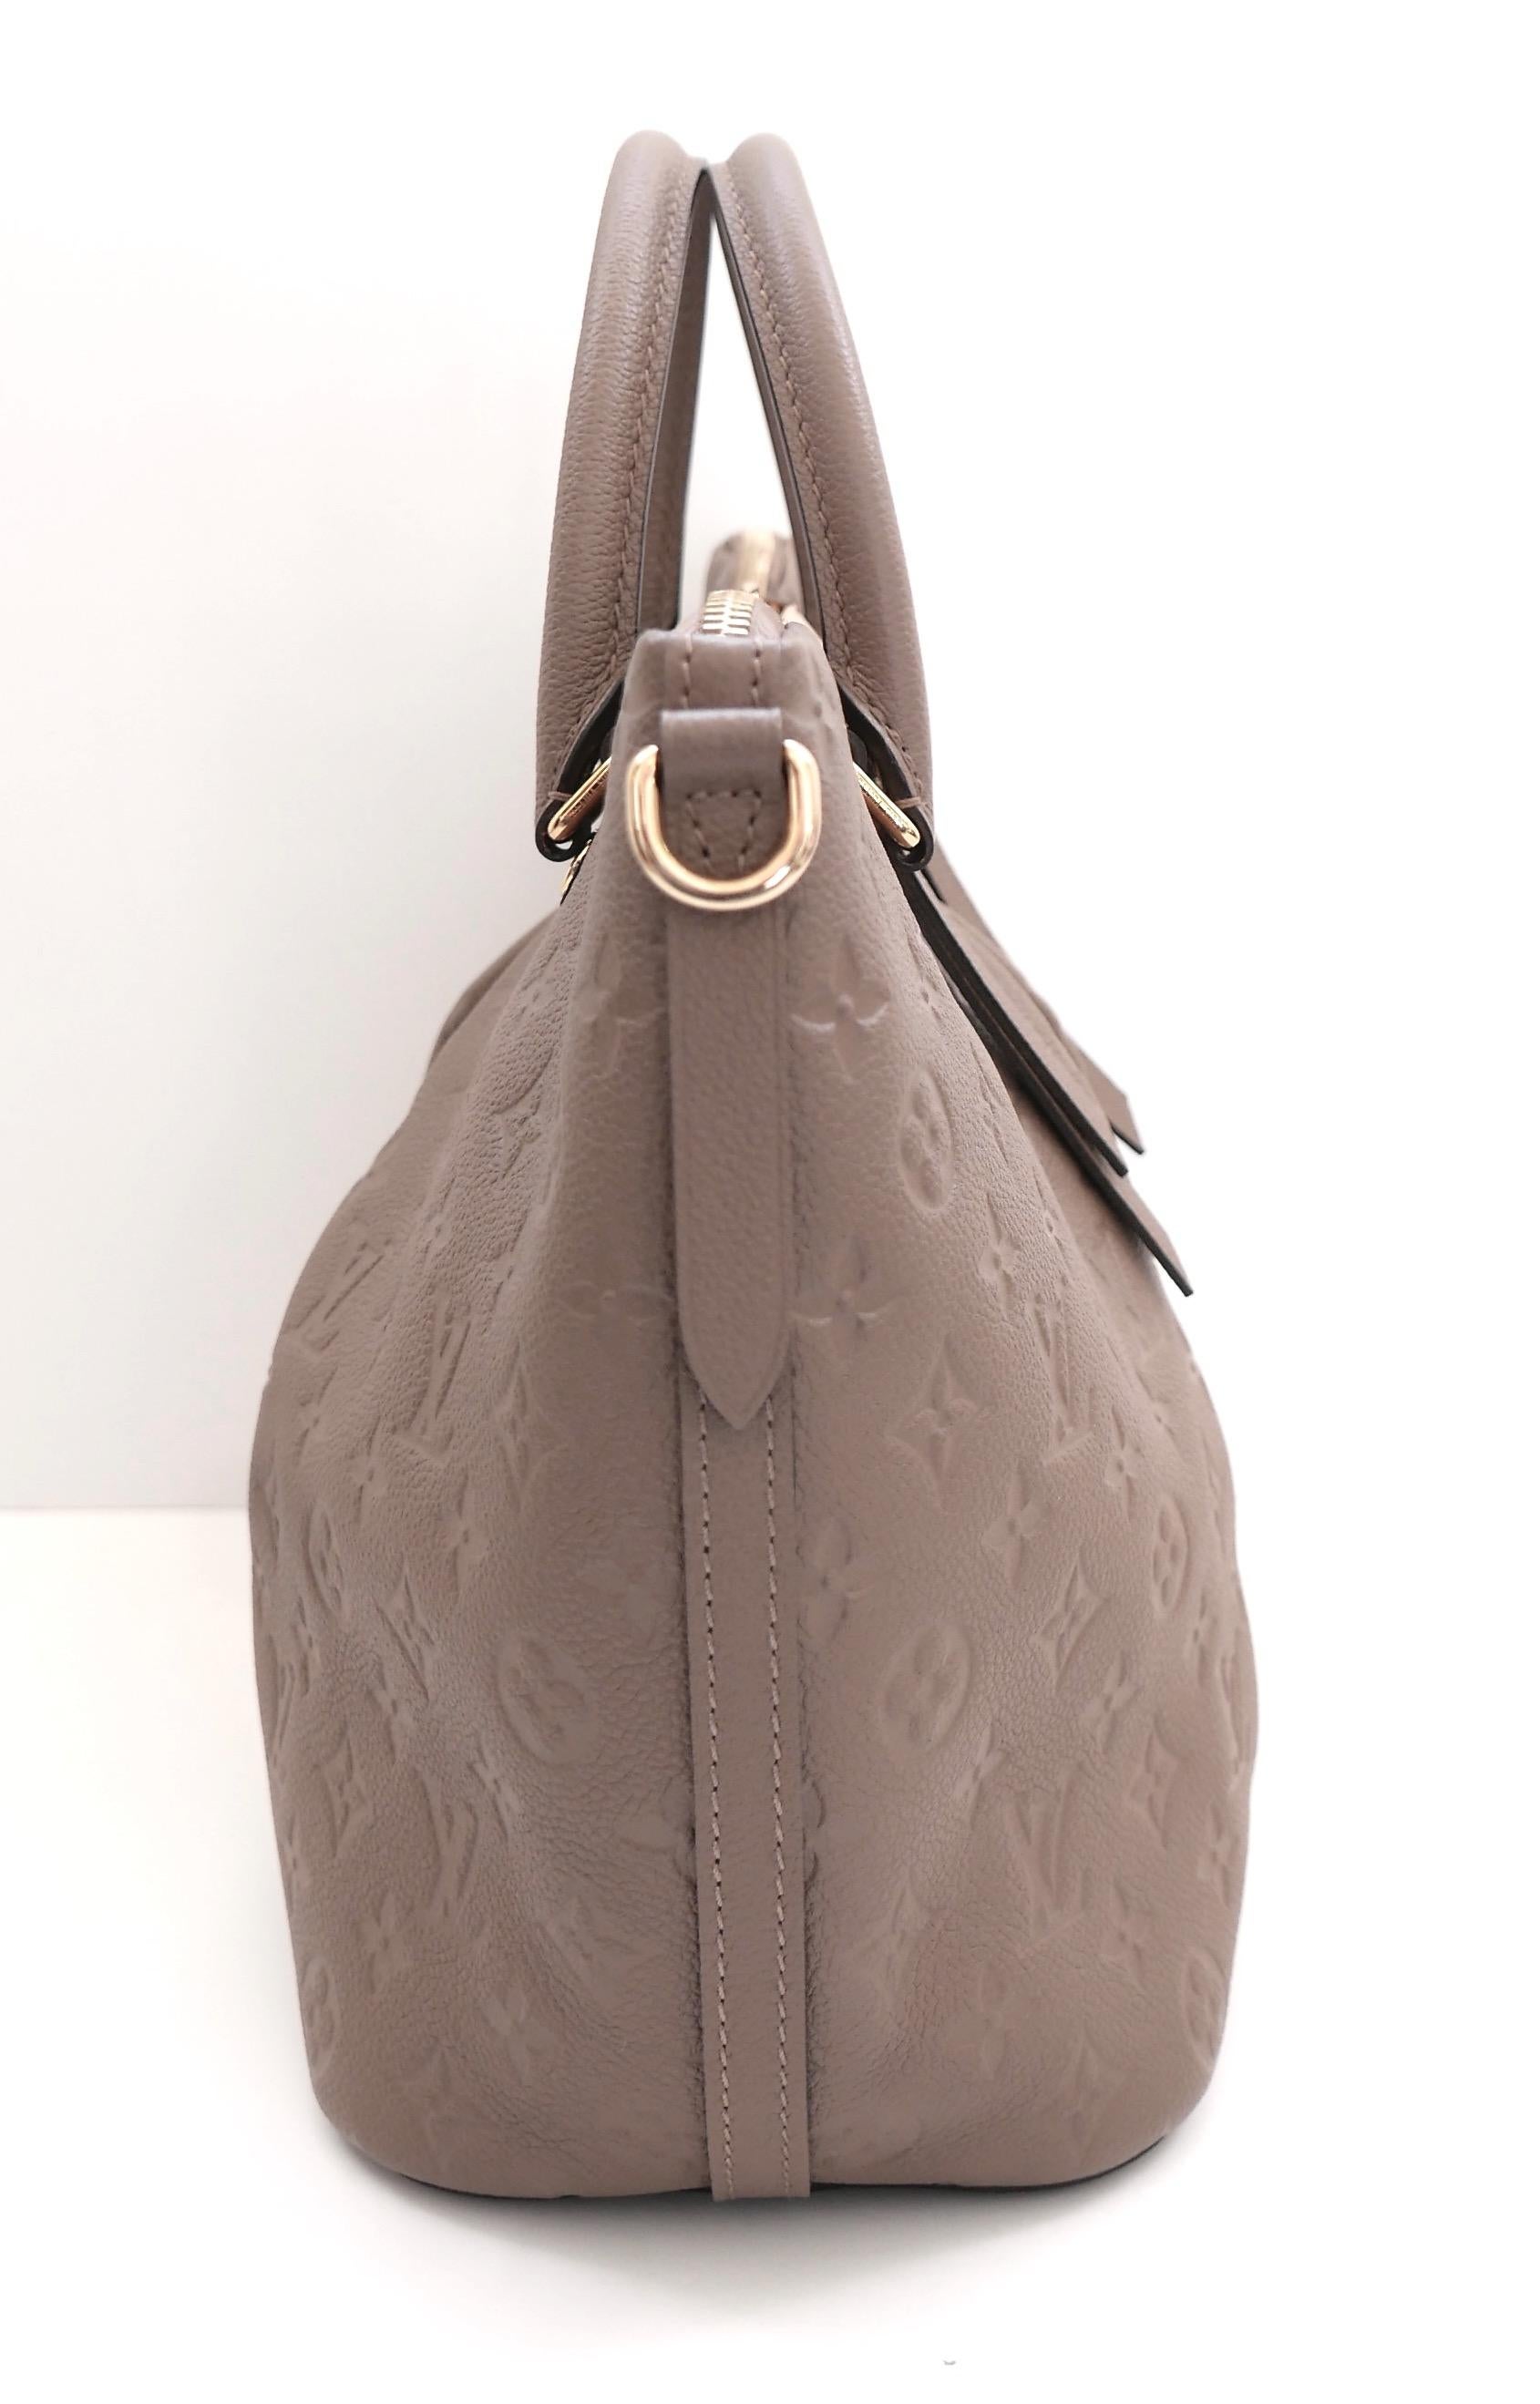  Louis Vuitton Empreinte Mazarine PM Bag In New Condition For Sale In London, GB